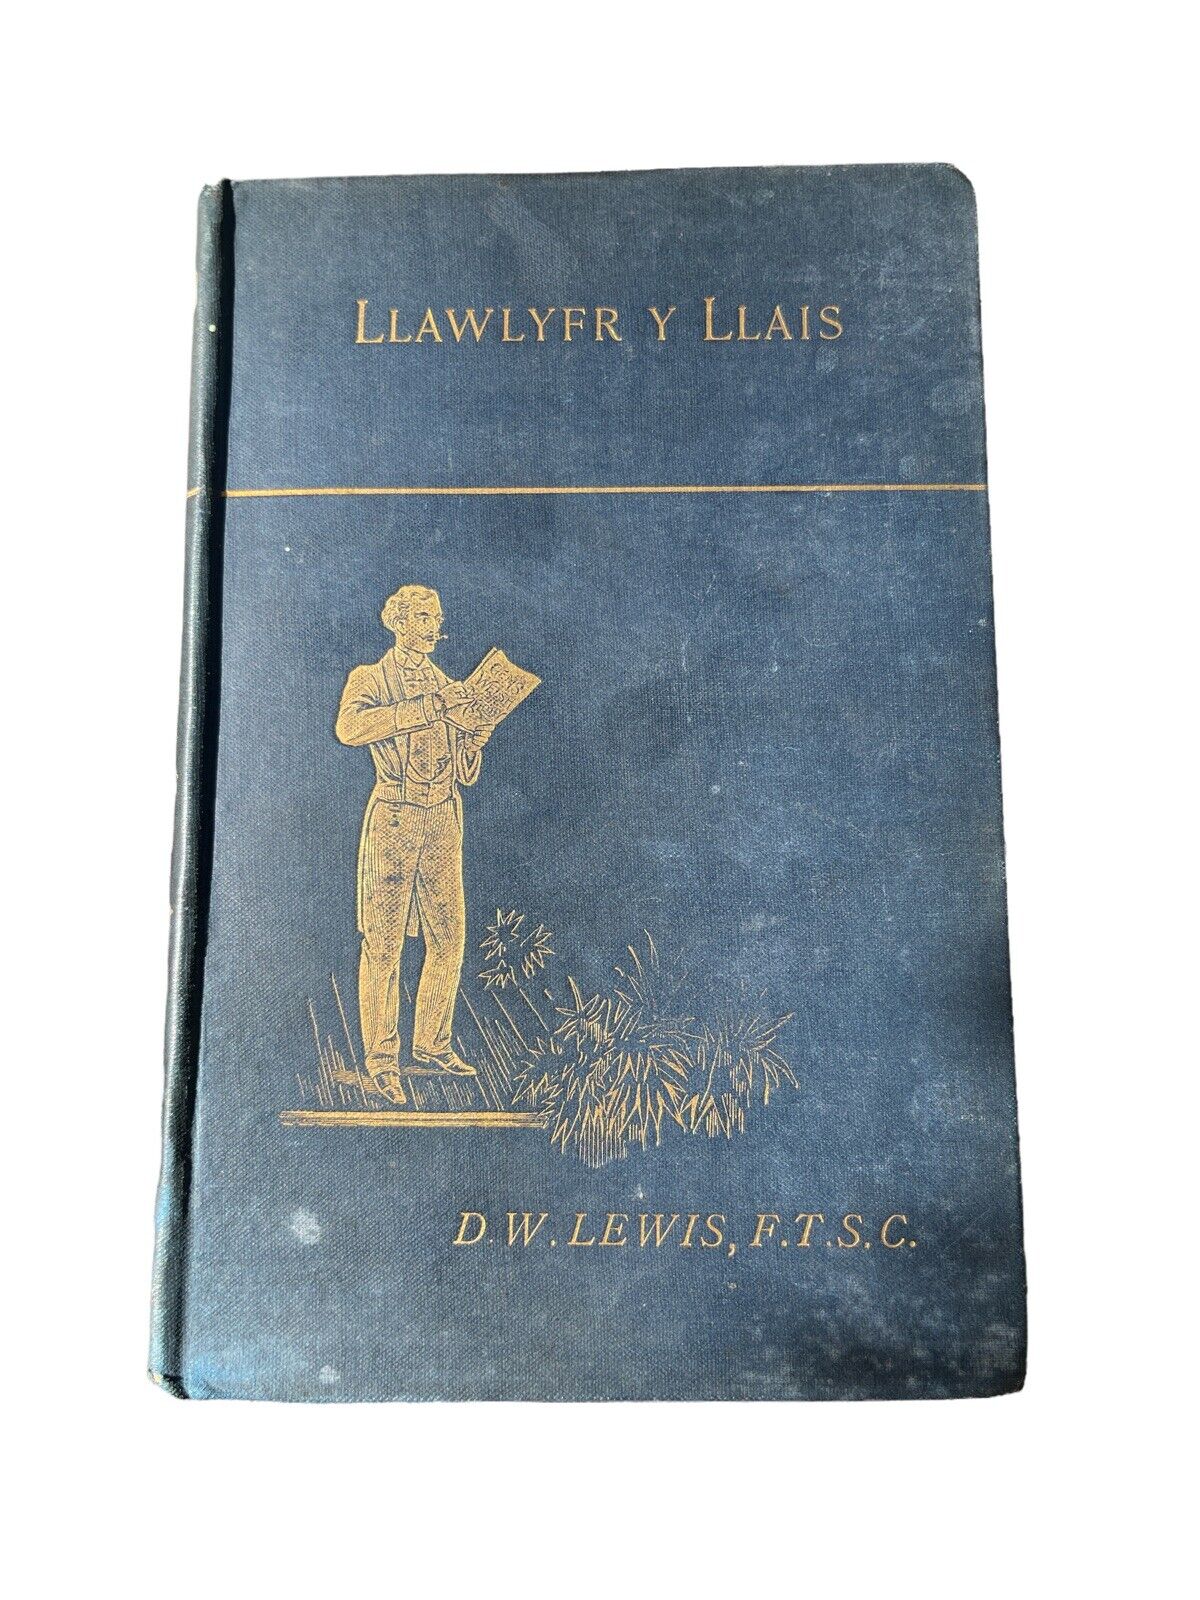 Antique David William Lewis Llawlyfr y Llais Book 1893 Welsh F.T.S.C Voice Music